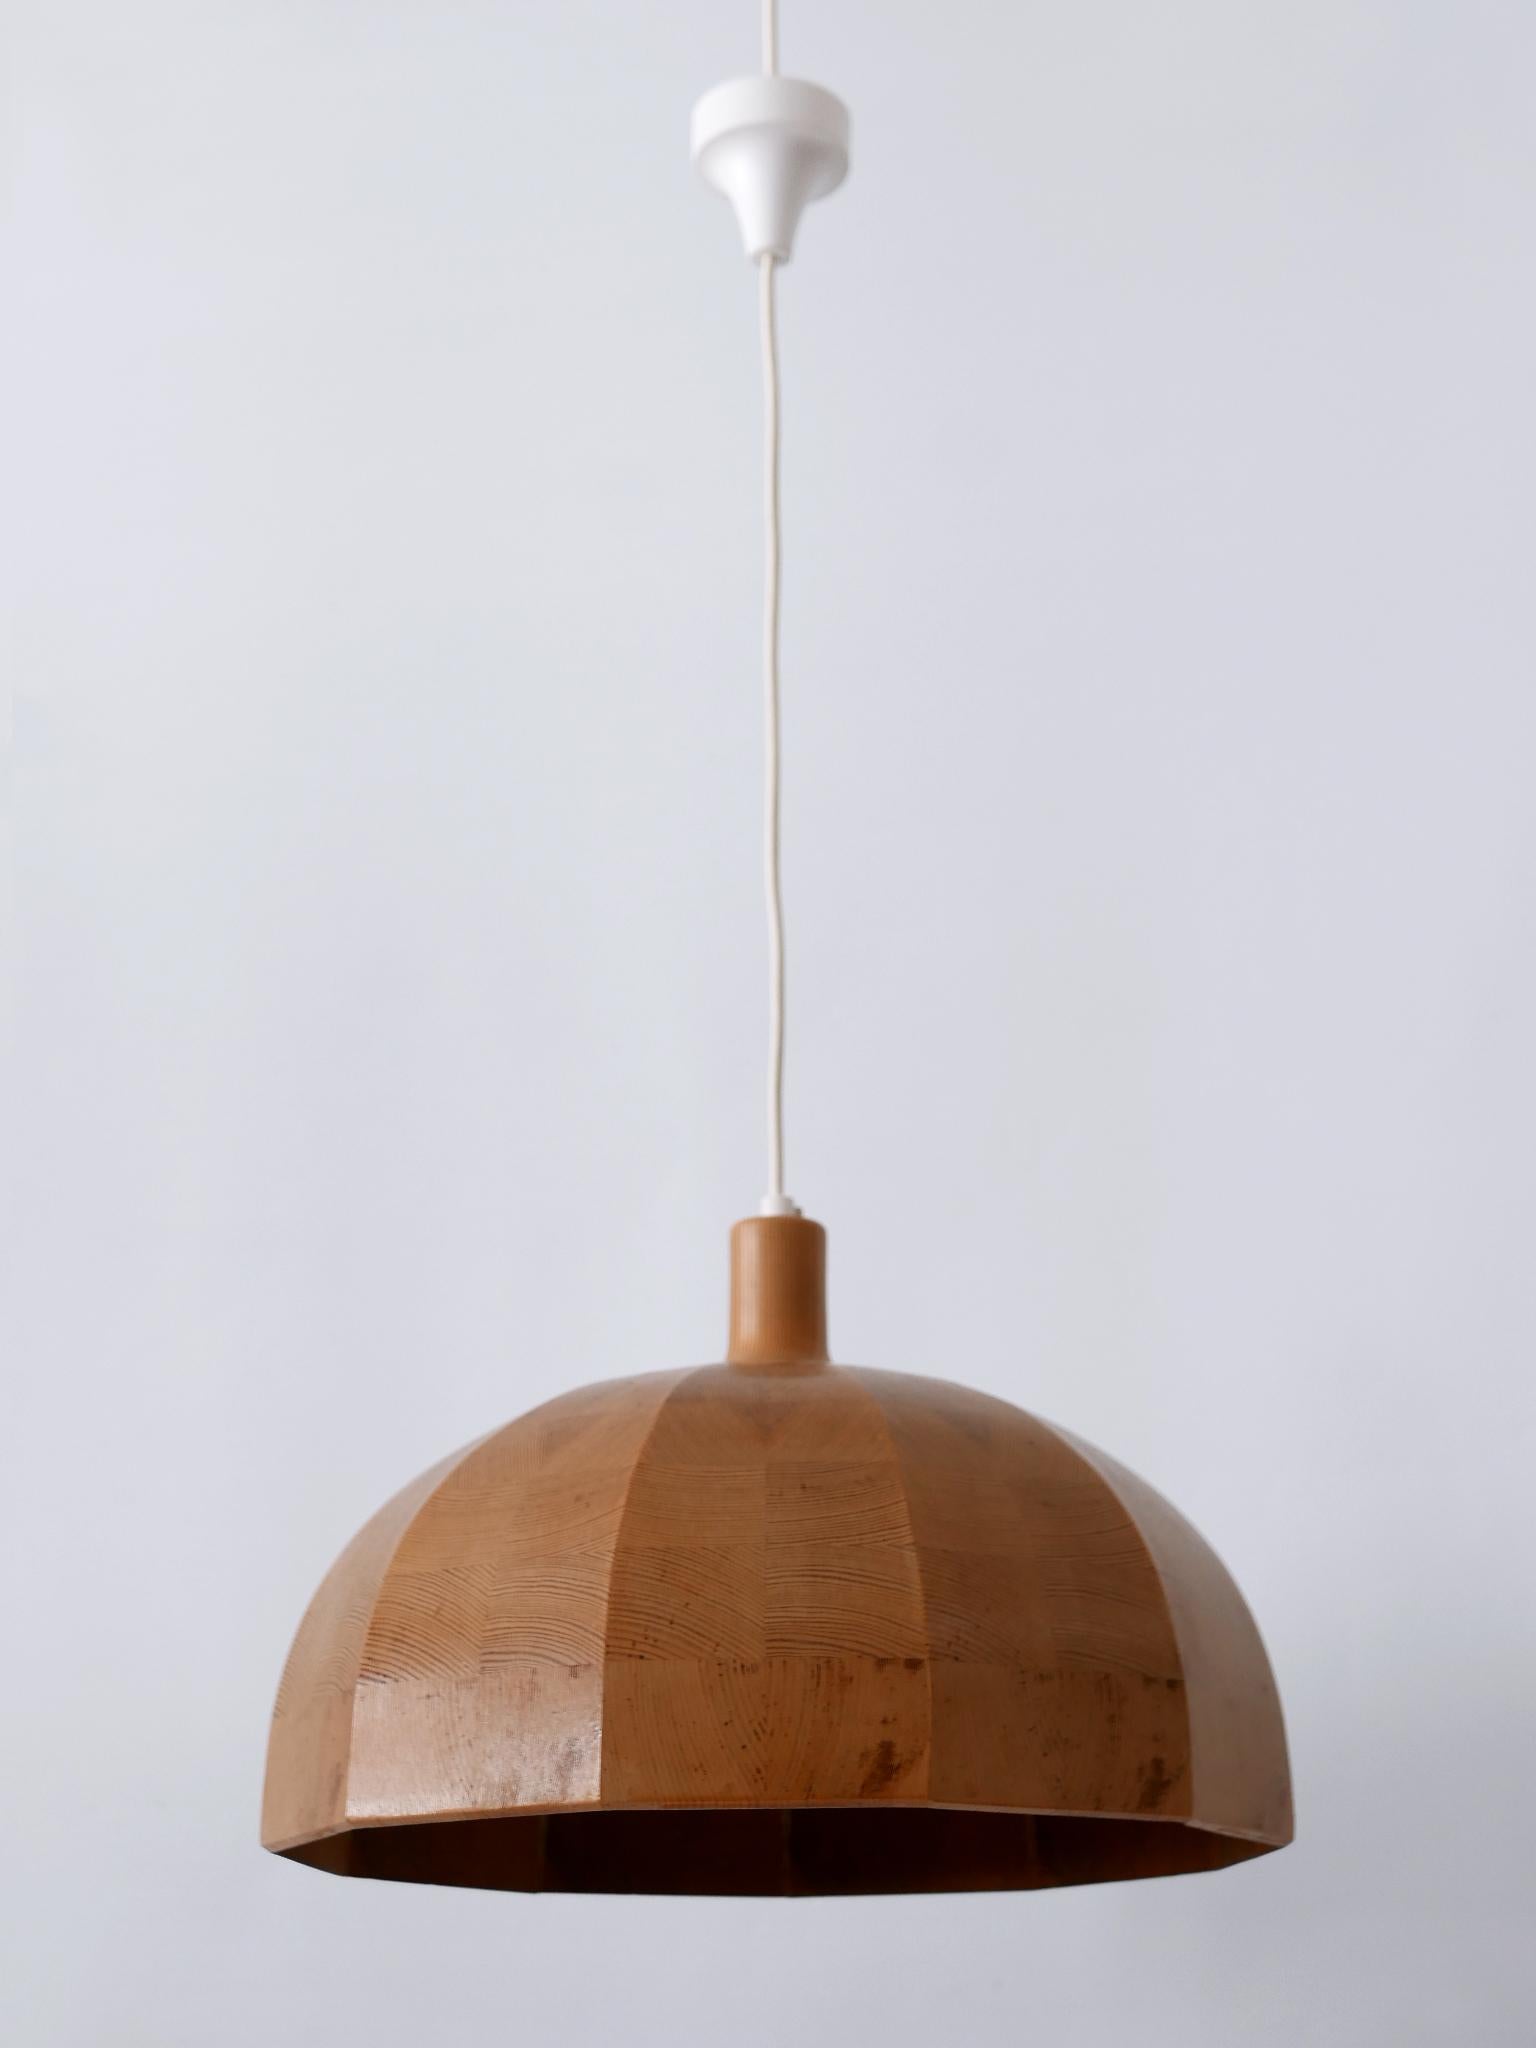 Rare Mid-Century Modern Pine Wood Pendant Lamp or Hanging Light Sweden, 1960s For Sale 1